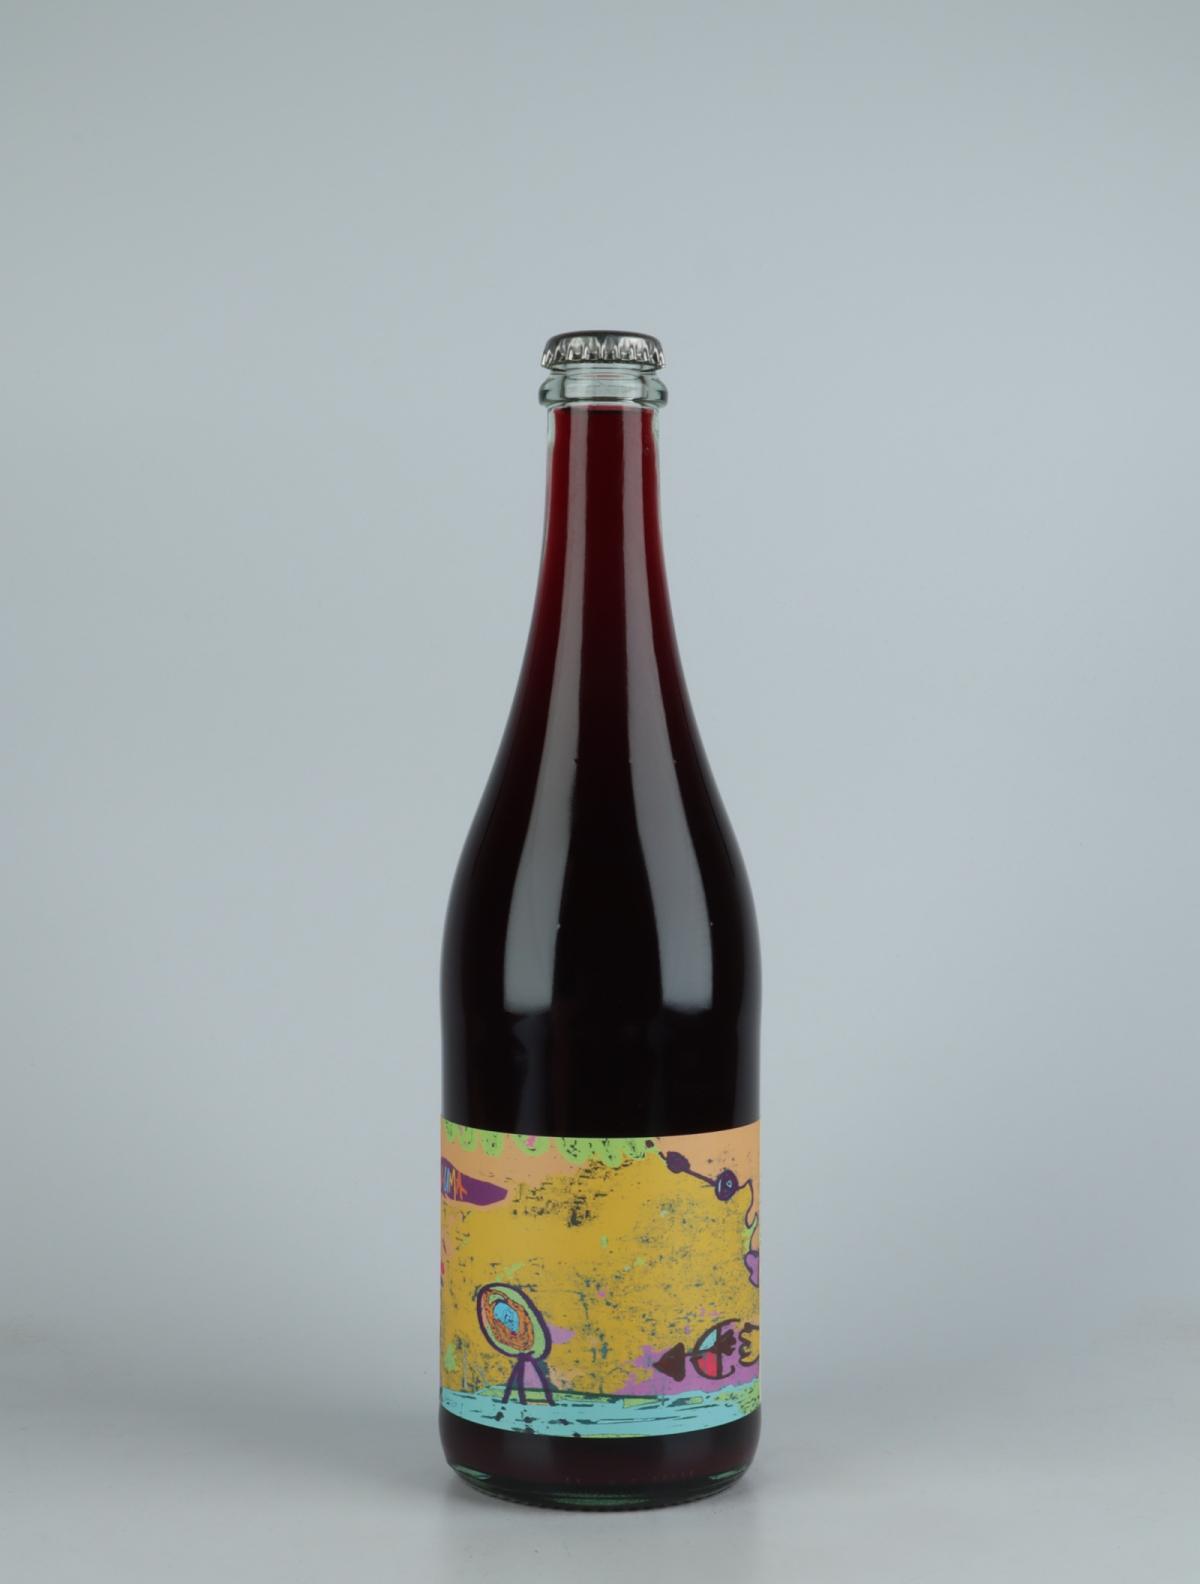 A bottle 2021 Audrey's Fairygarden Red wine from Jauma, Adelaide Hills in Australia